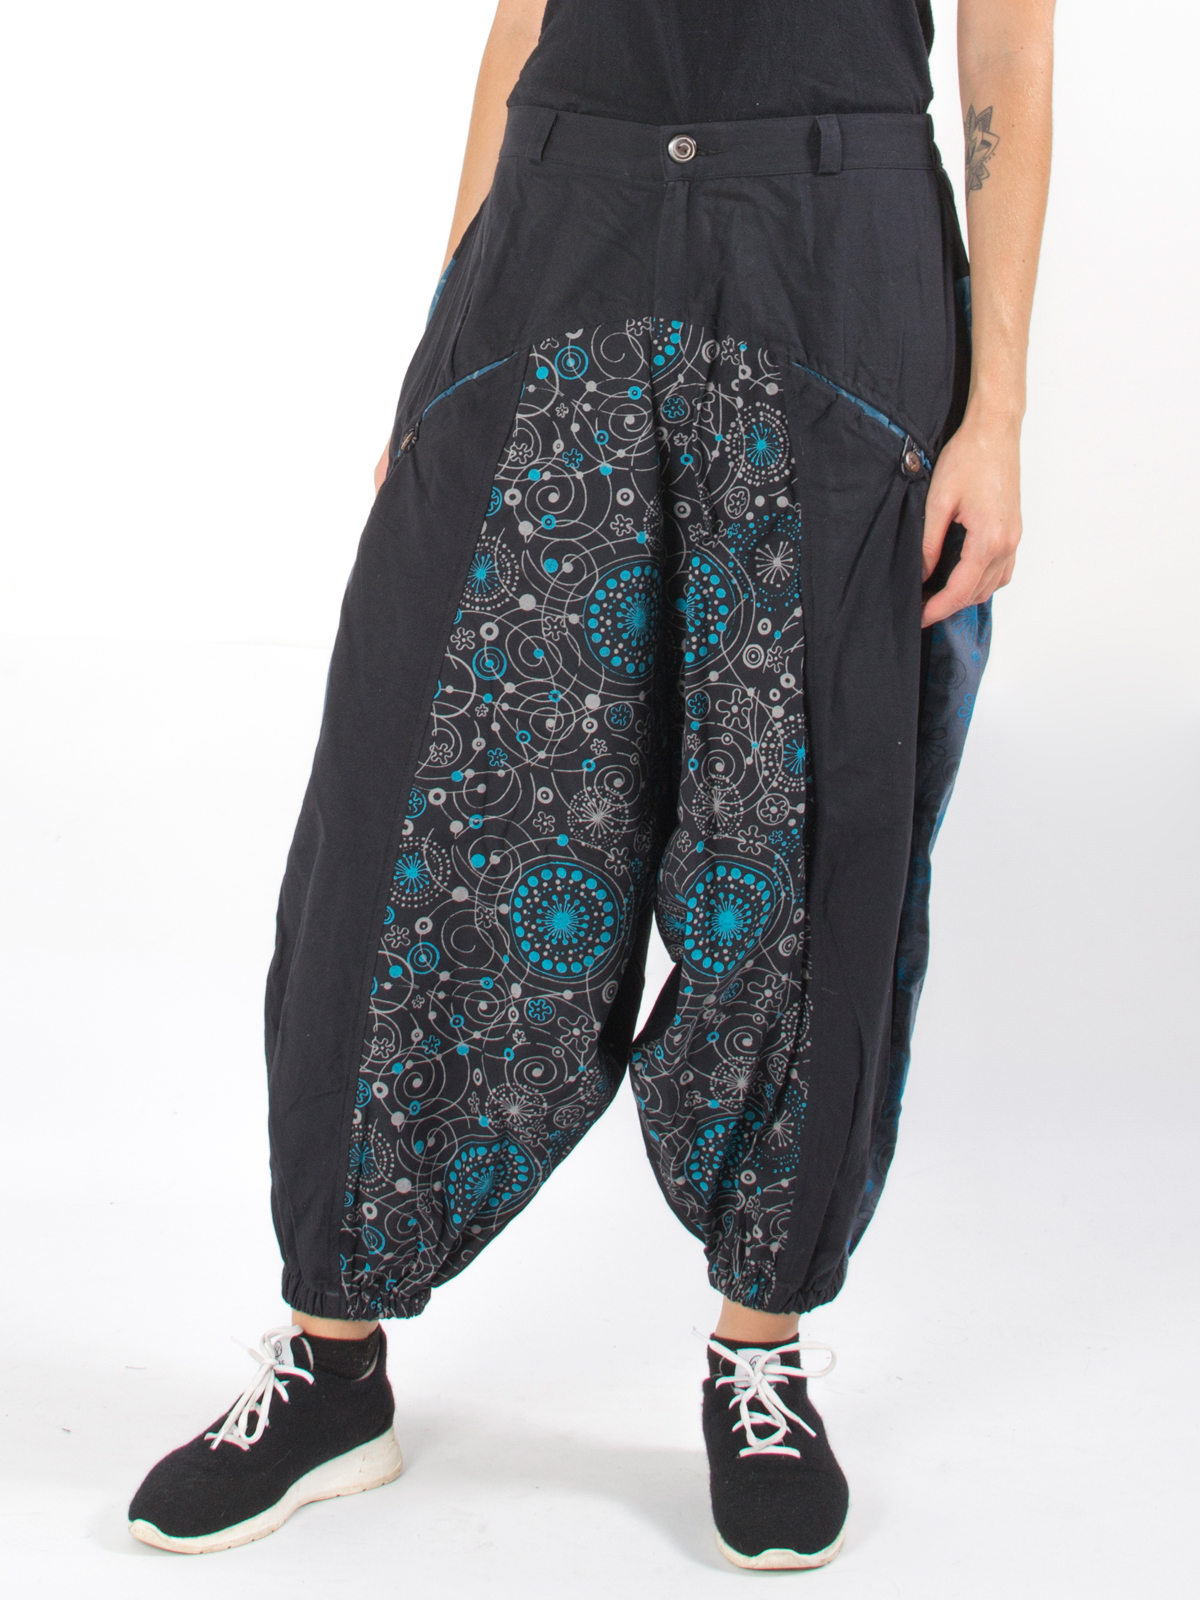 Pantalon bouffant noir et bleu motif style 70's